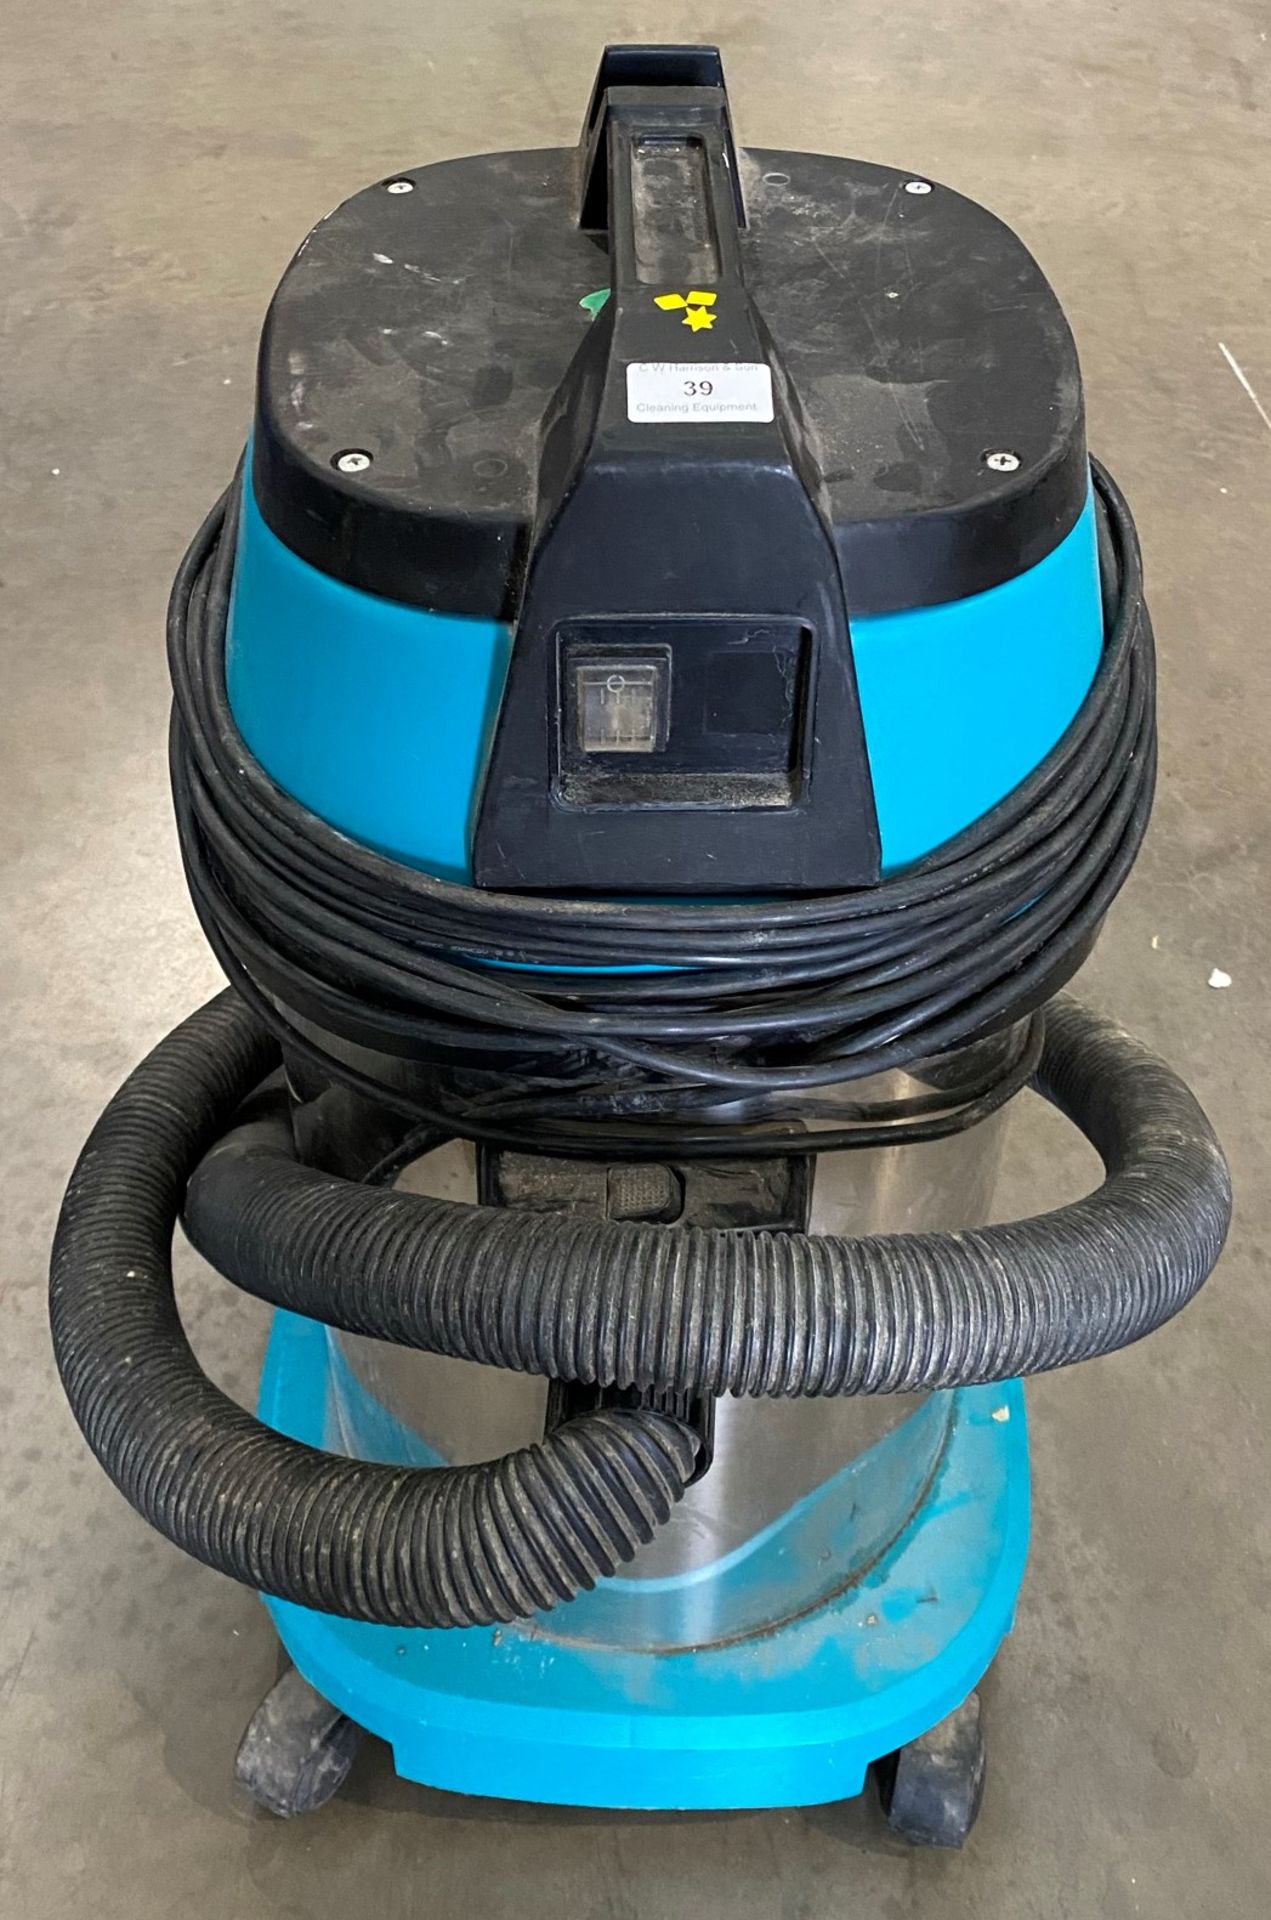 An Intrinsic AS30 30L 240v waterproof vacuum